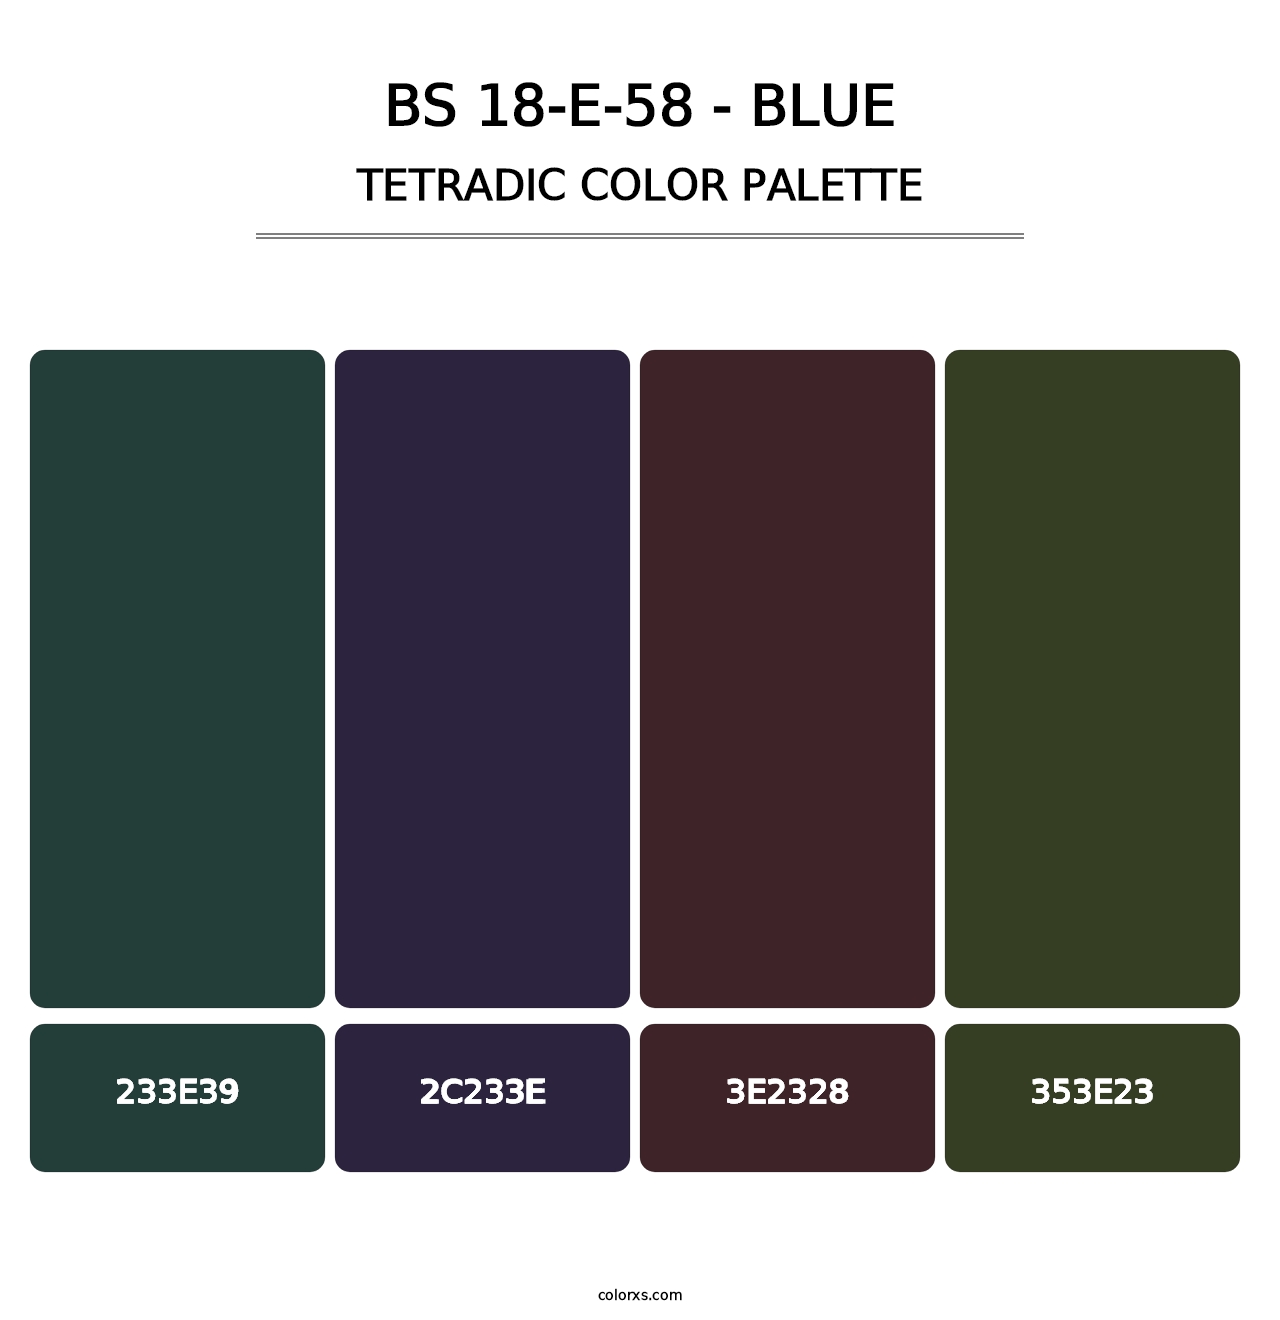 BS 18-E-58 - Blue - Tetradic Color Palette